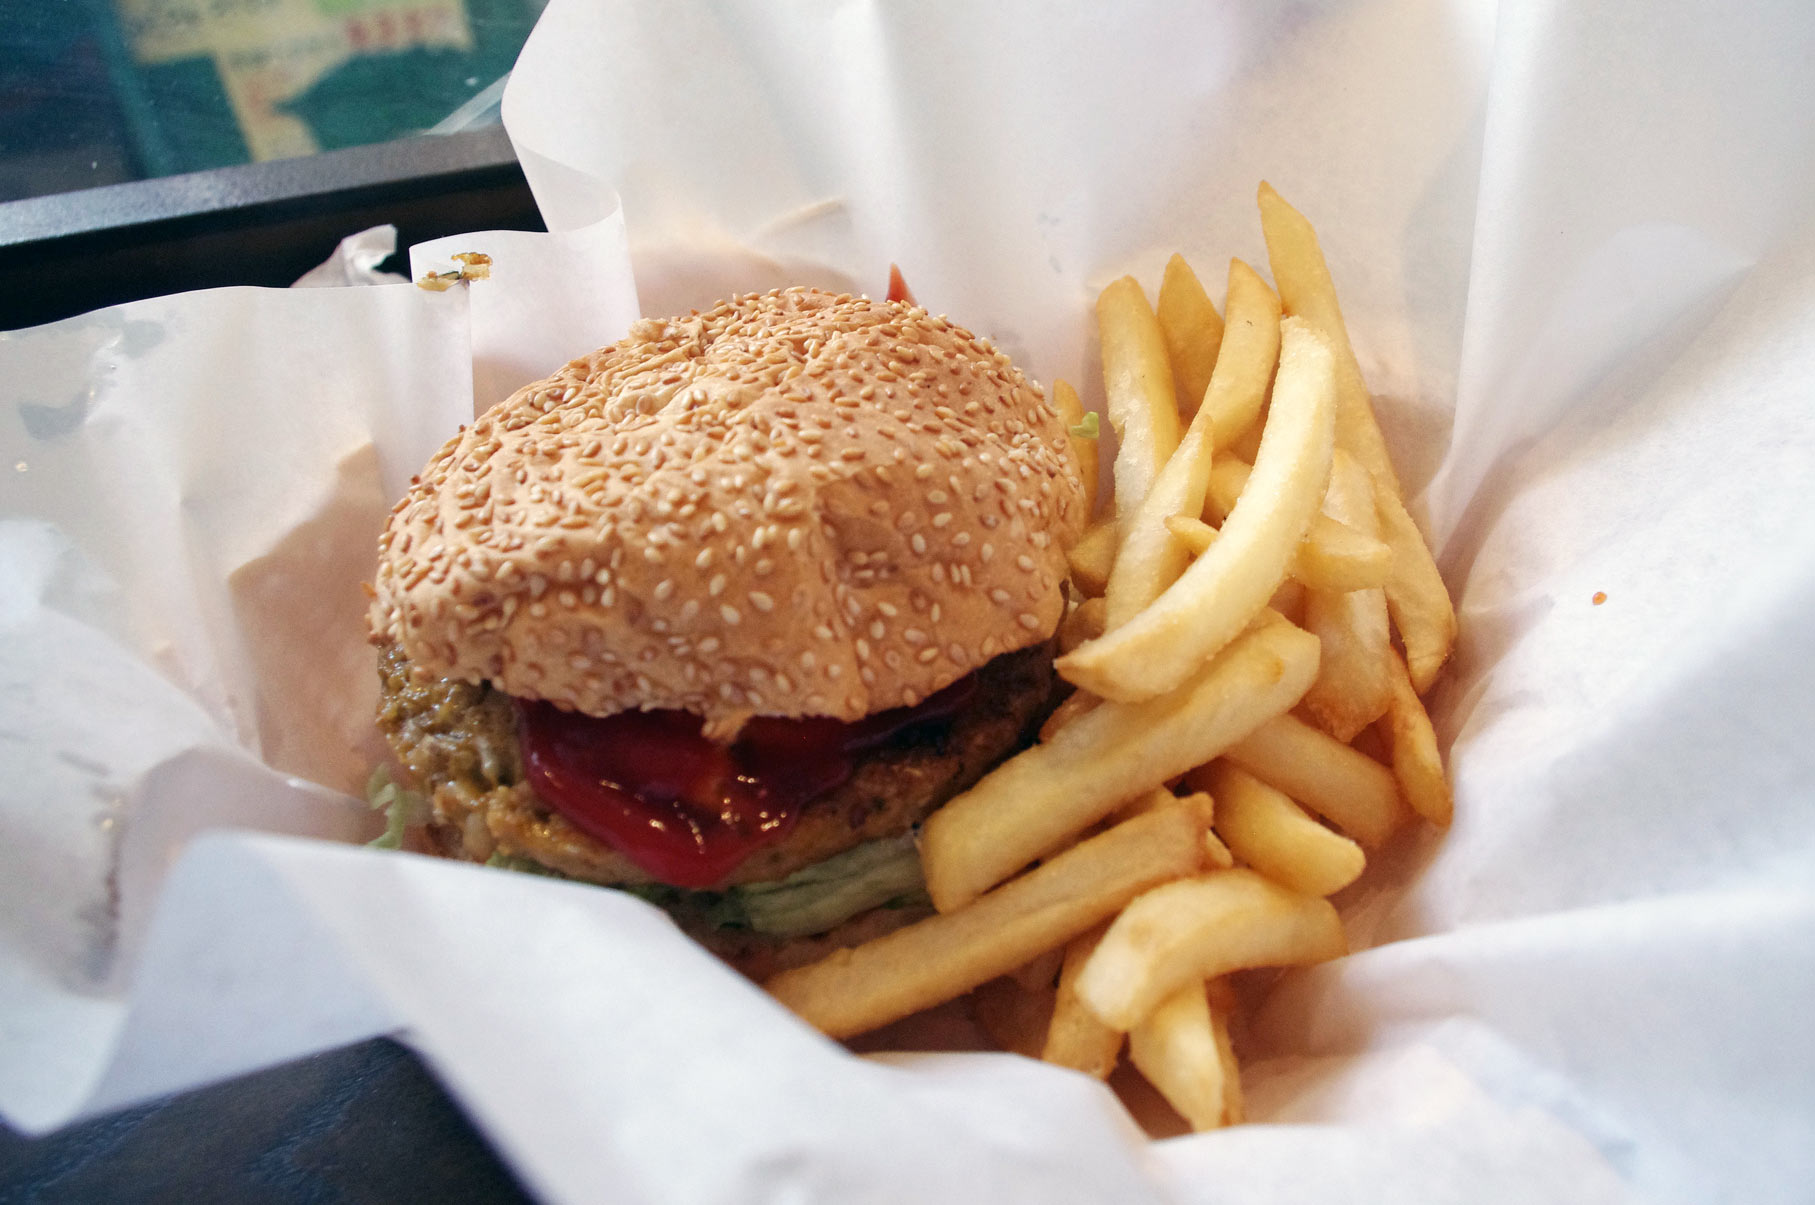 Burger and fries at Shake em Buns in Hong Kong. Photo by alphacityguides.